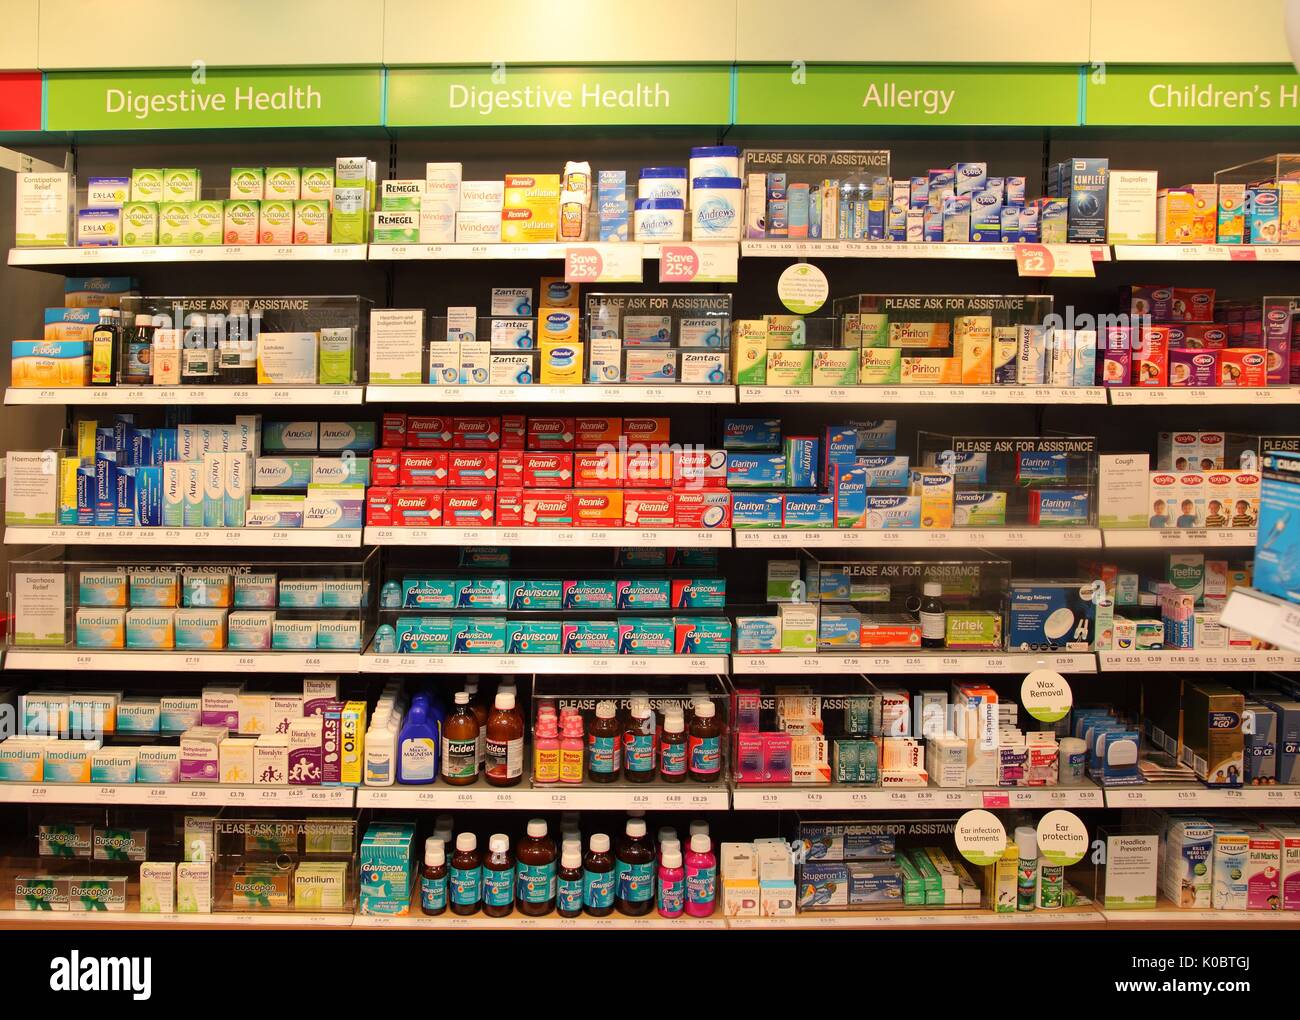 Pharmacy shelves - Stock Image - M640/0280 - Science Photo Library